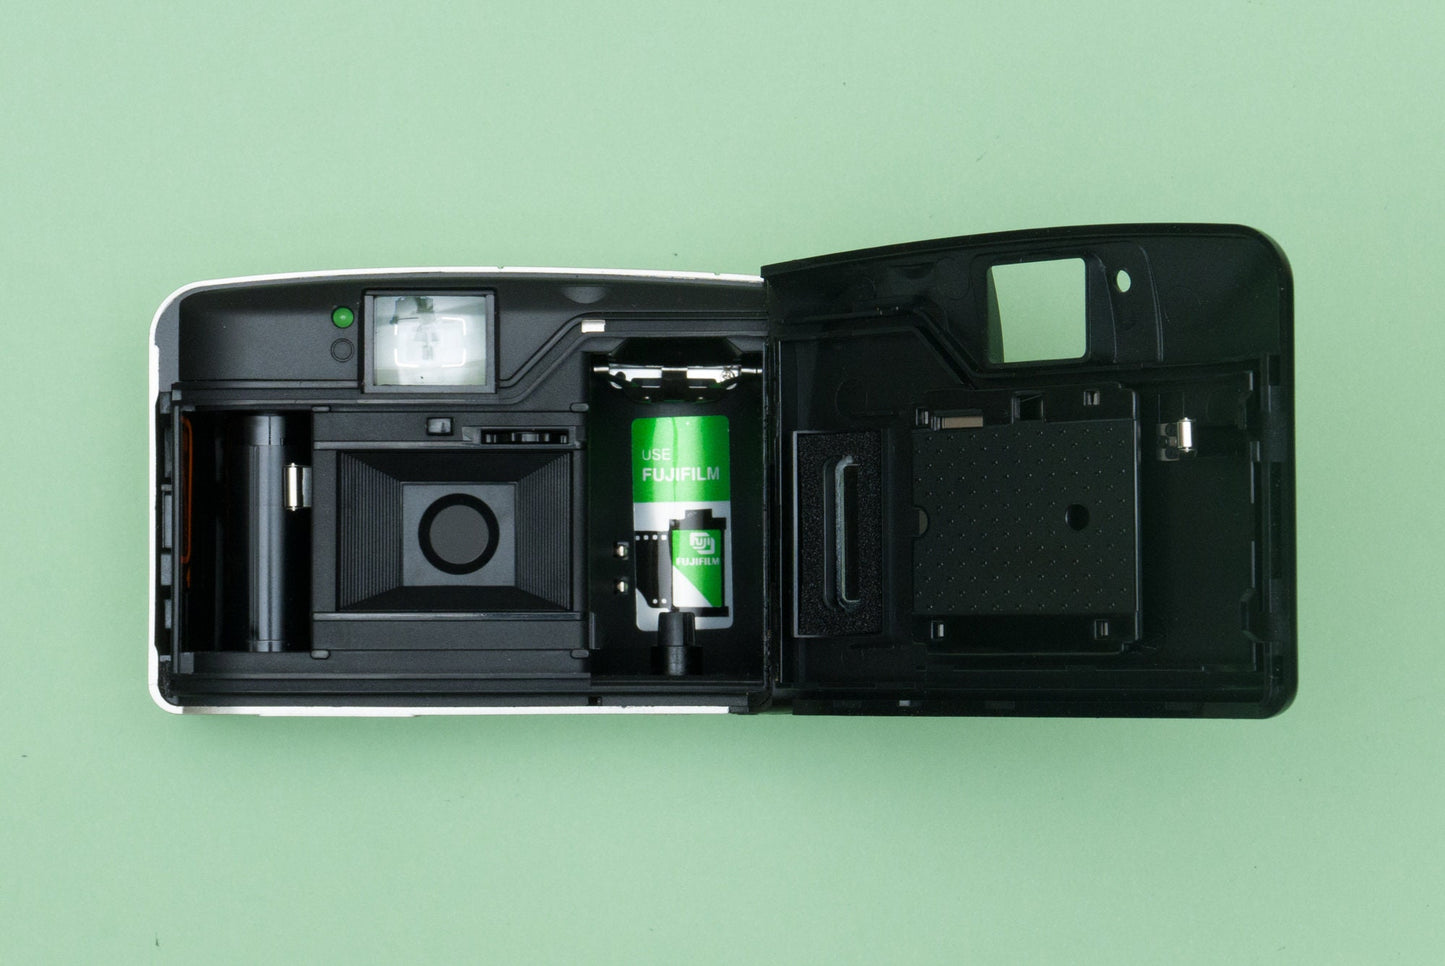 Fujifilm Clear Shot 20 Auto Compact 35mm Film Camera